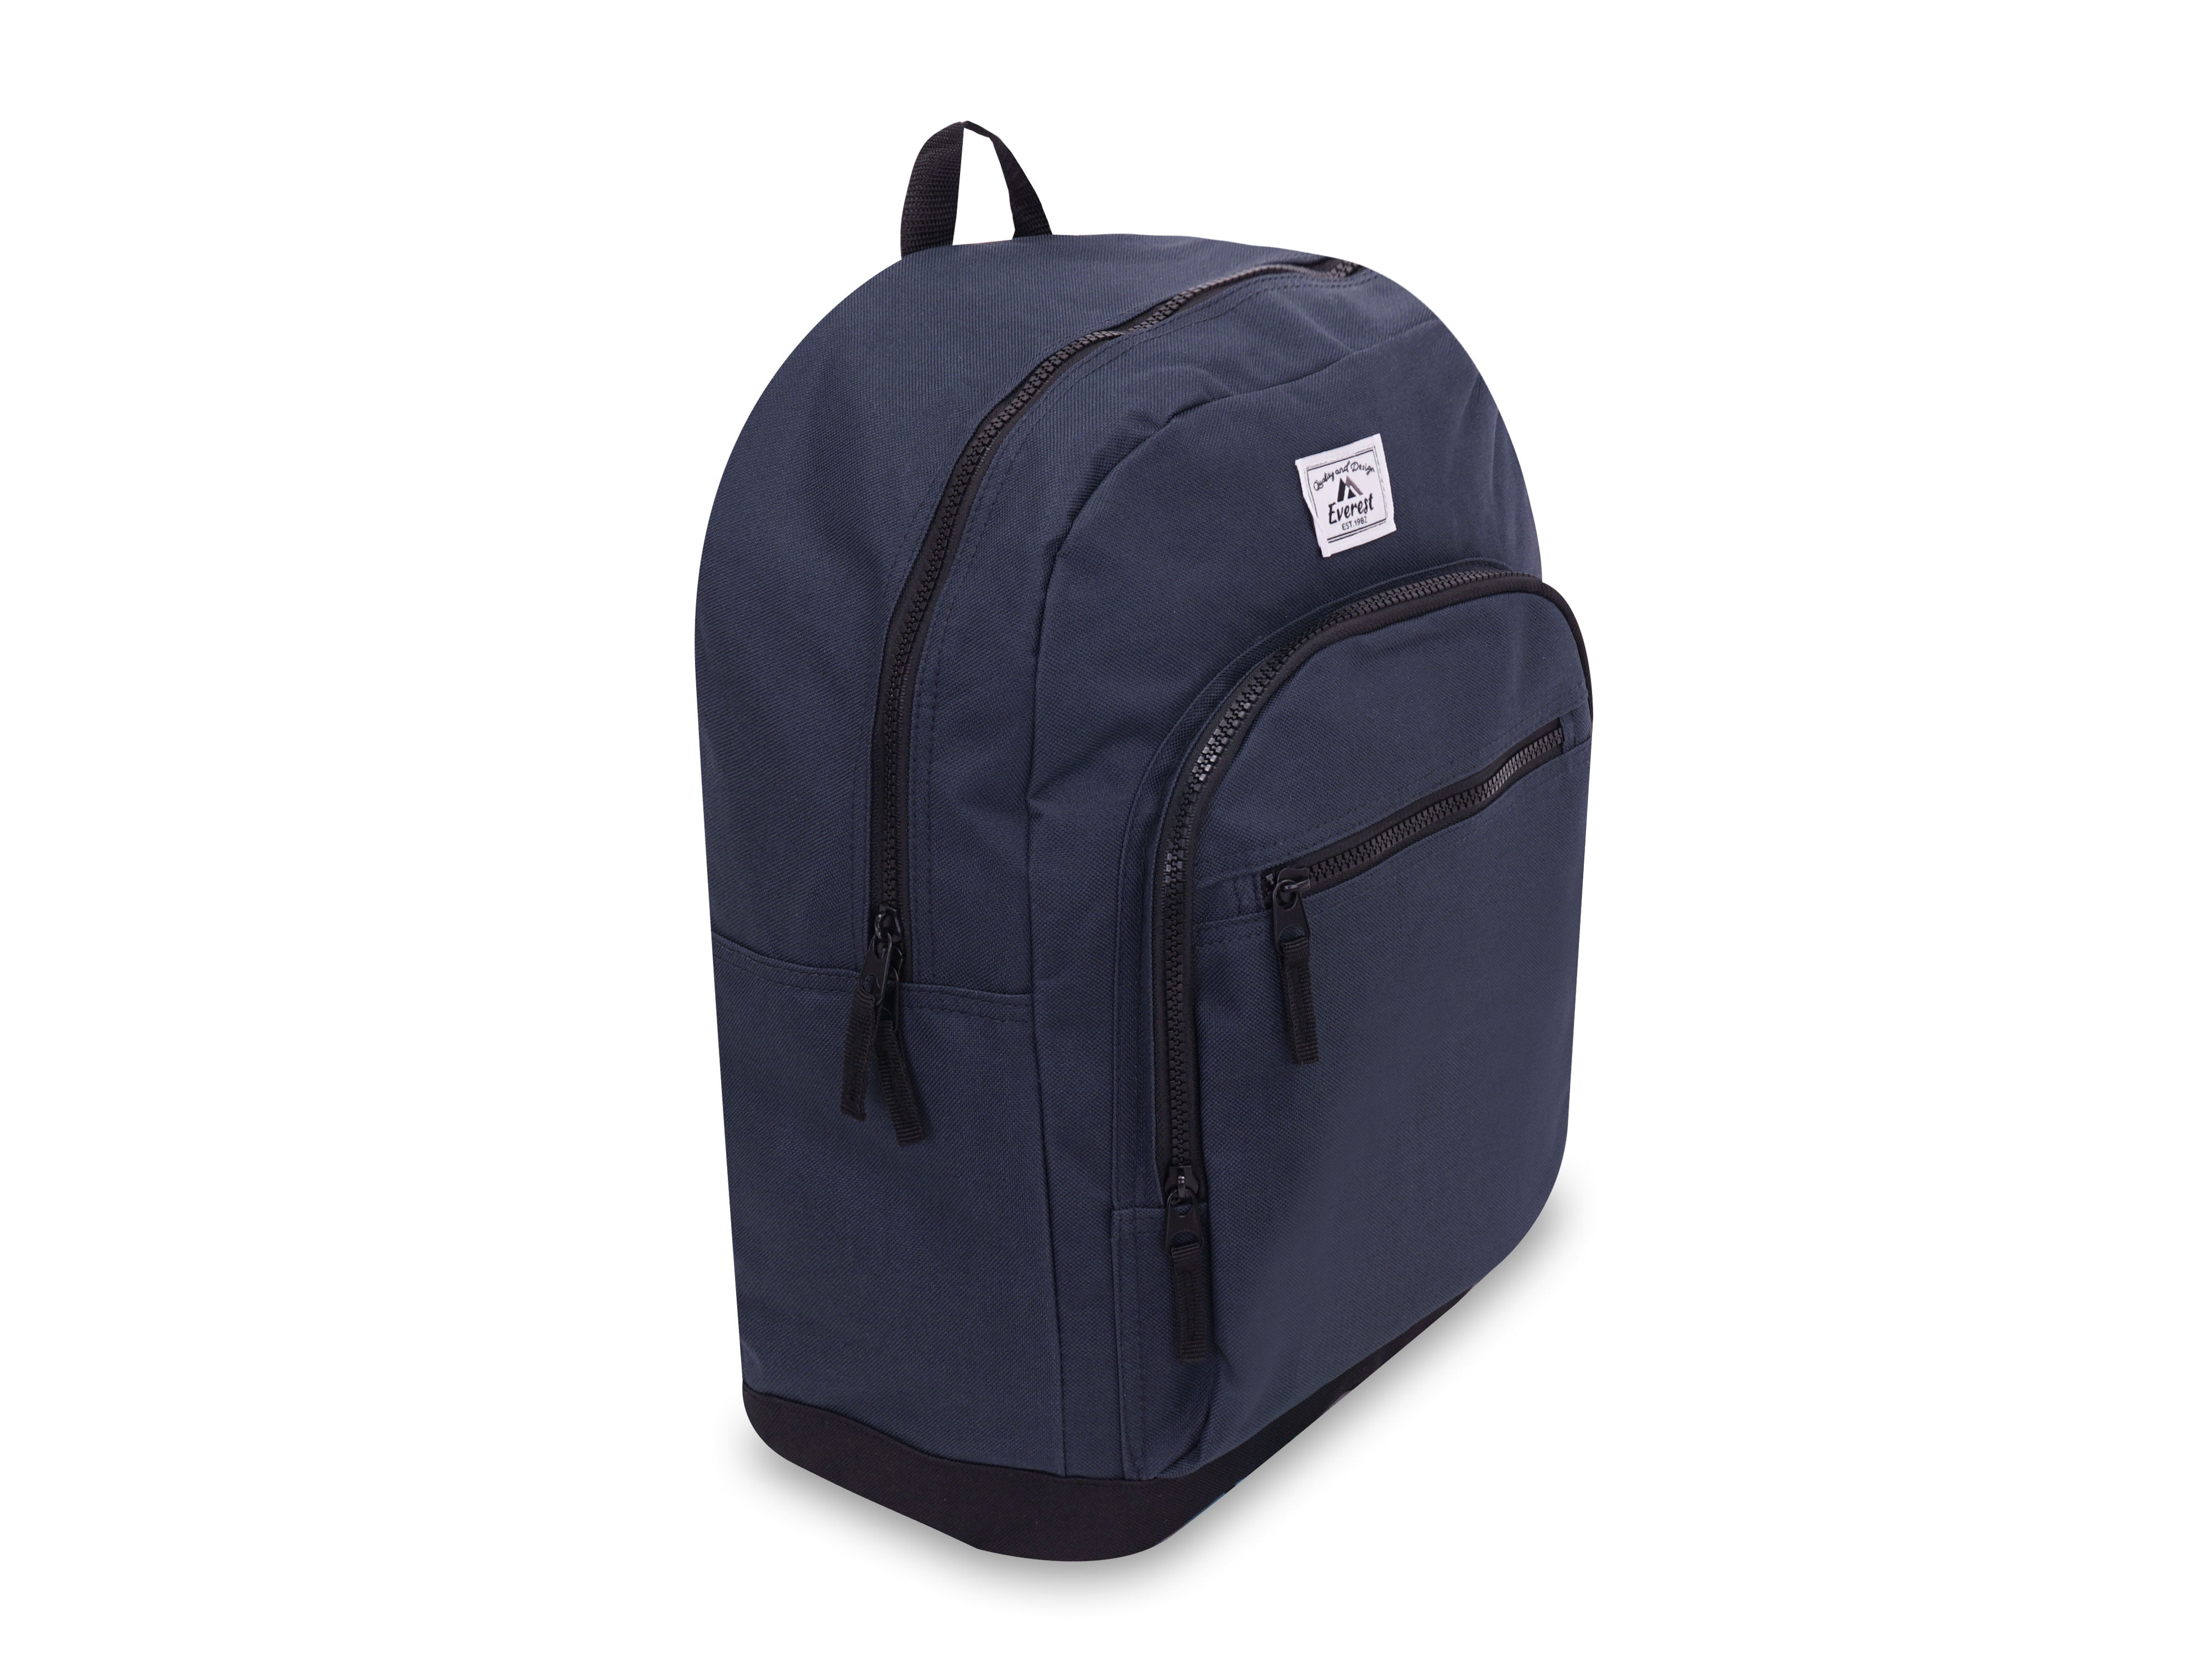  Everest 054mUtility Bag, Black, One Size,054-BK